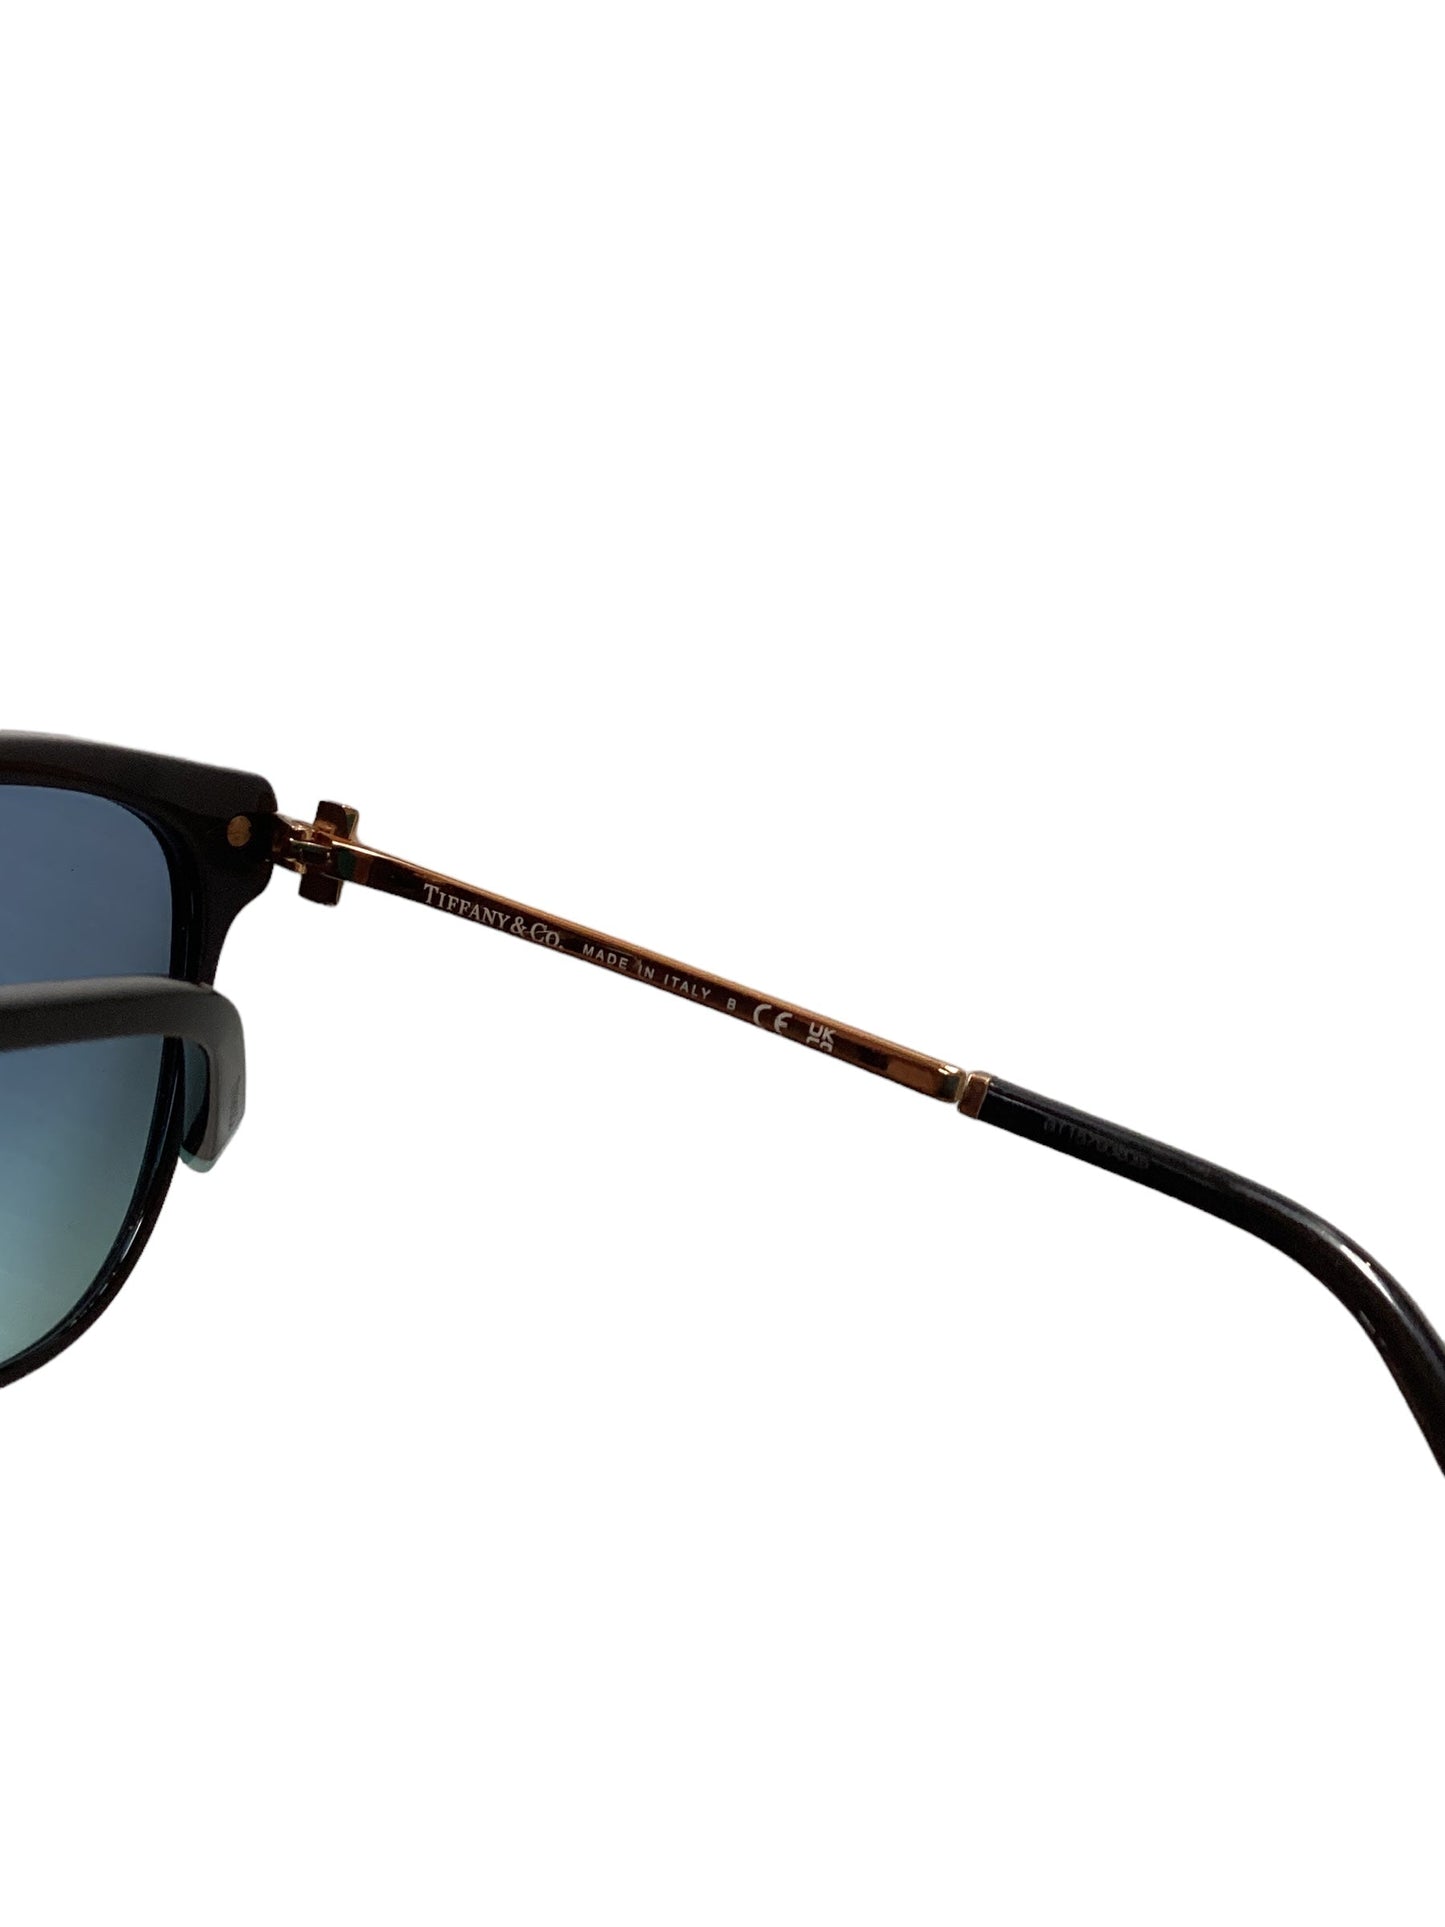 Sunglasses Designer By Tiffany And Company